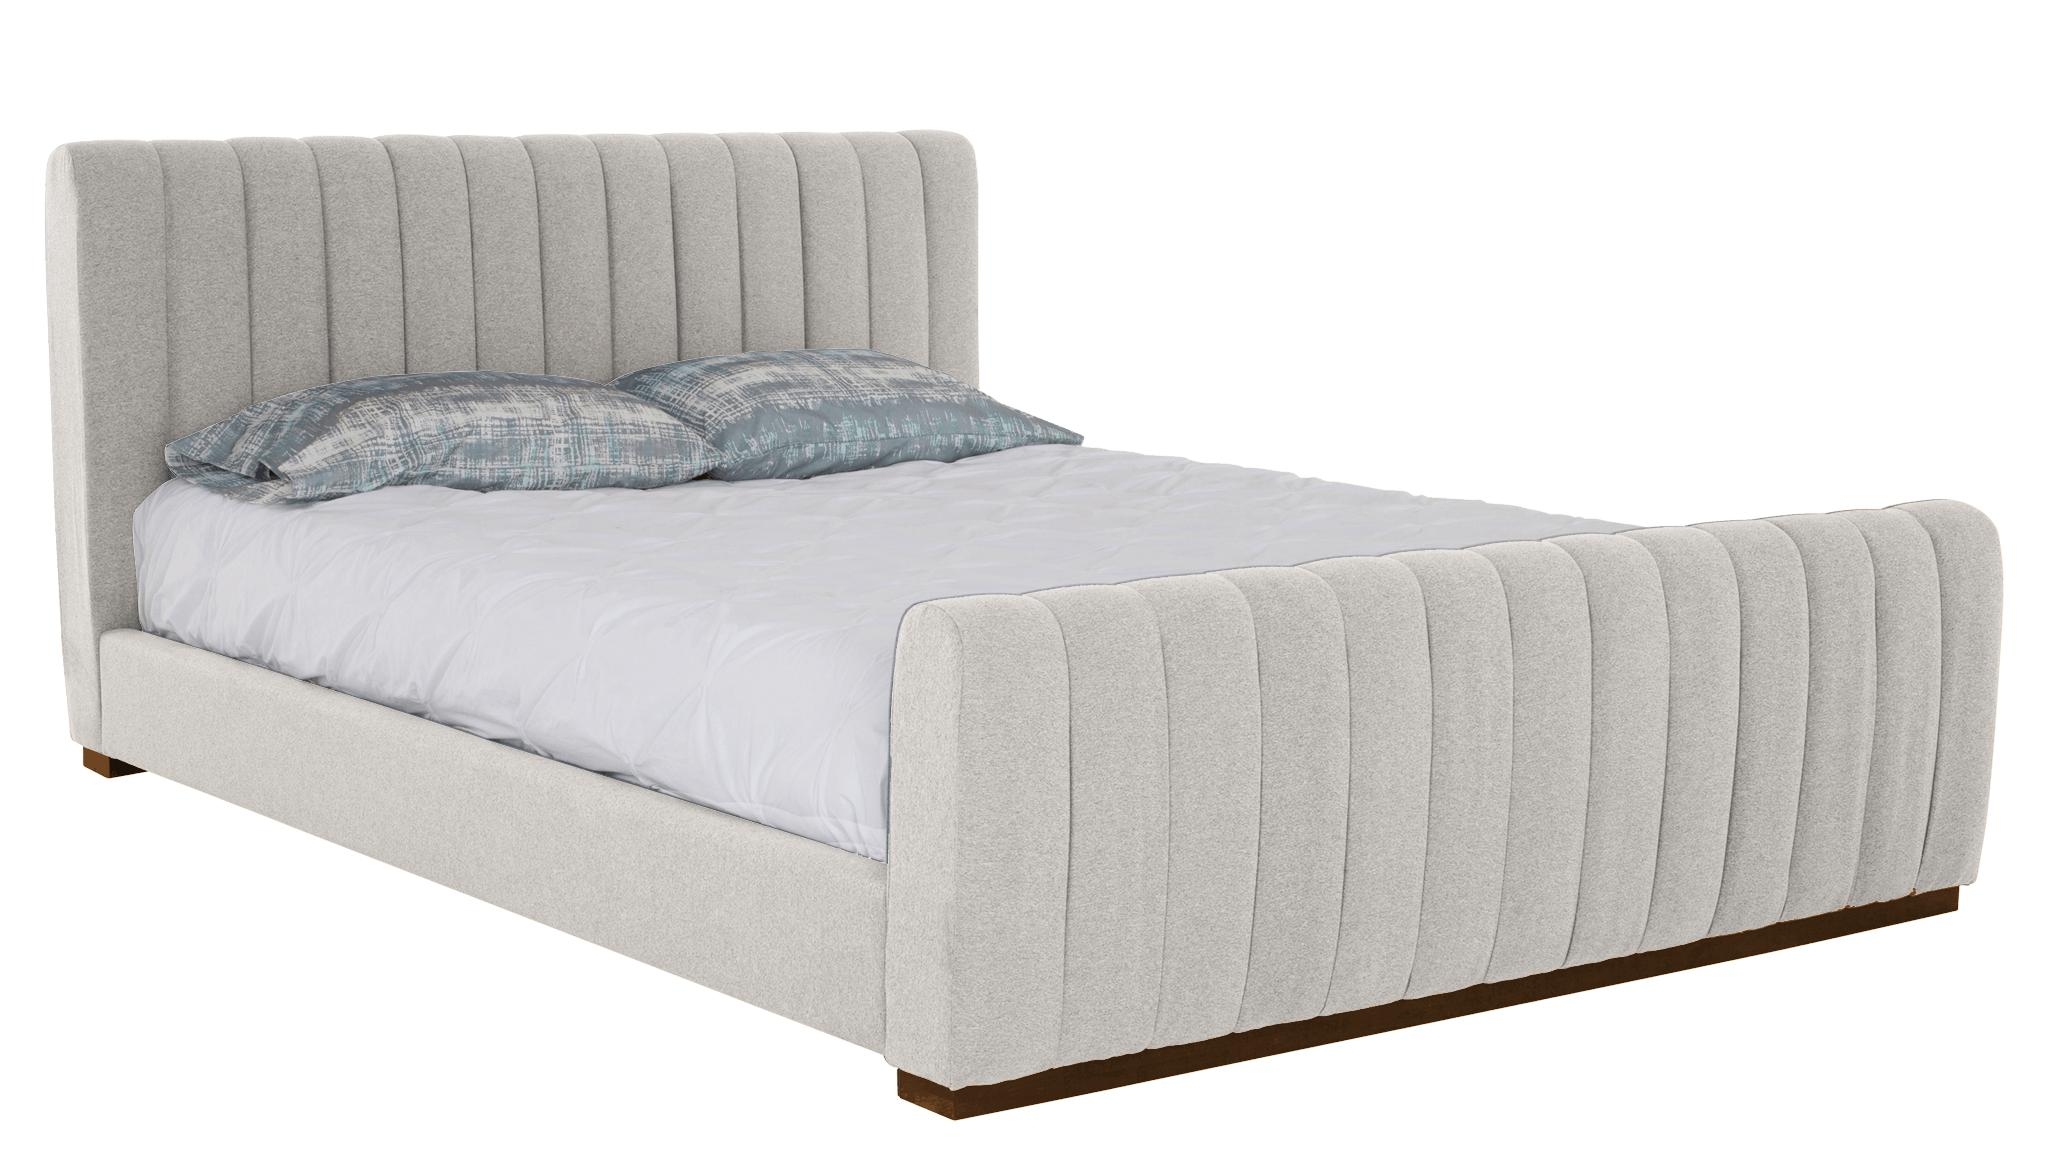 Beige/White Camille Mid Century Modern Bed - Merit Dove - Mocha - Eastern King - Image 1